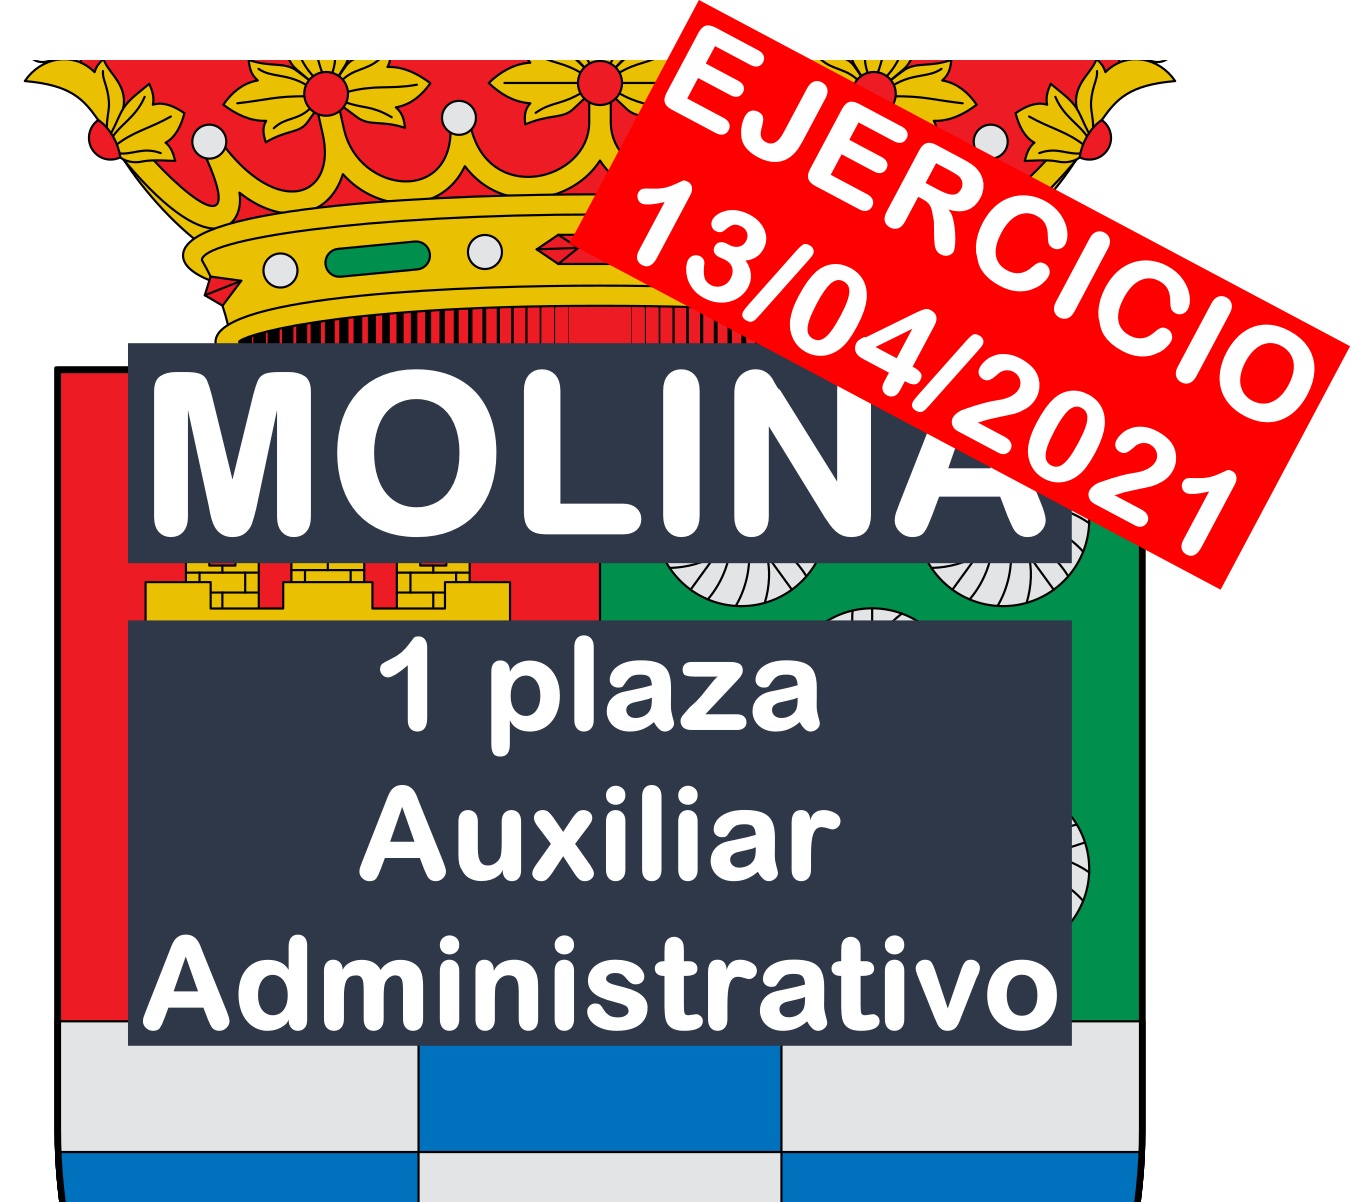 1 plaza Auxiliar Administrativo en Molina